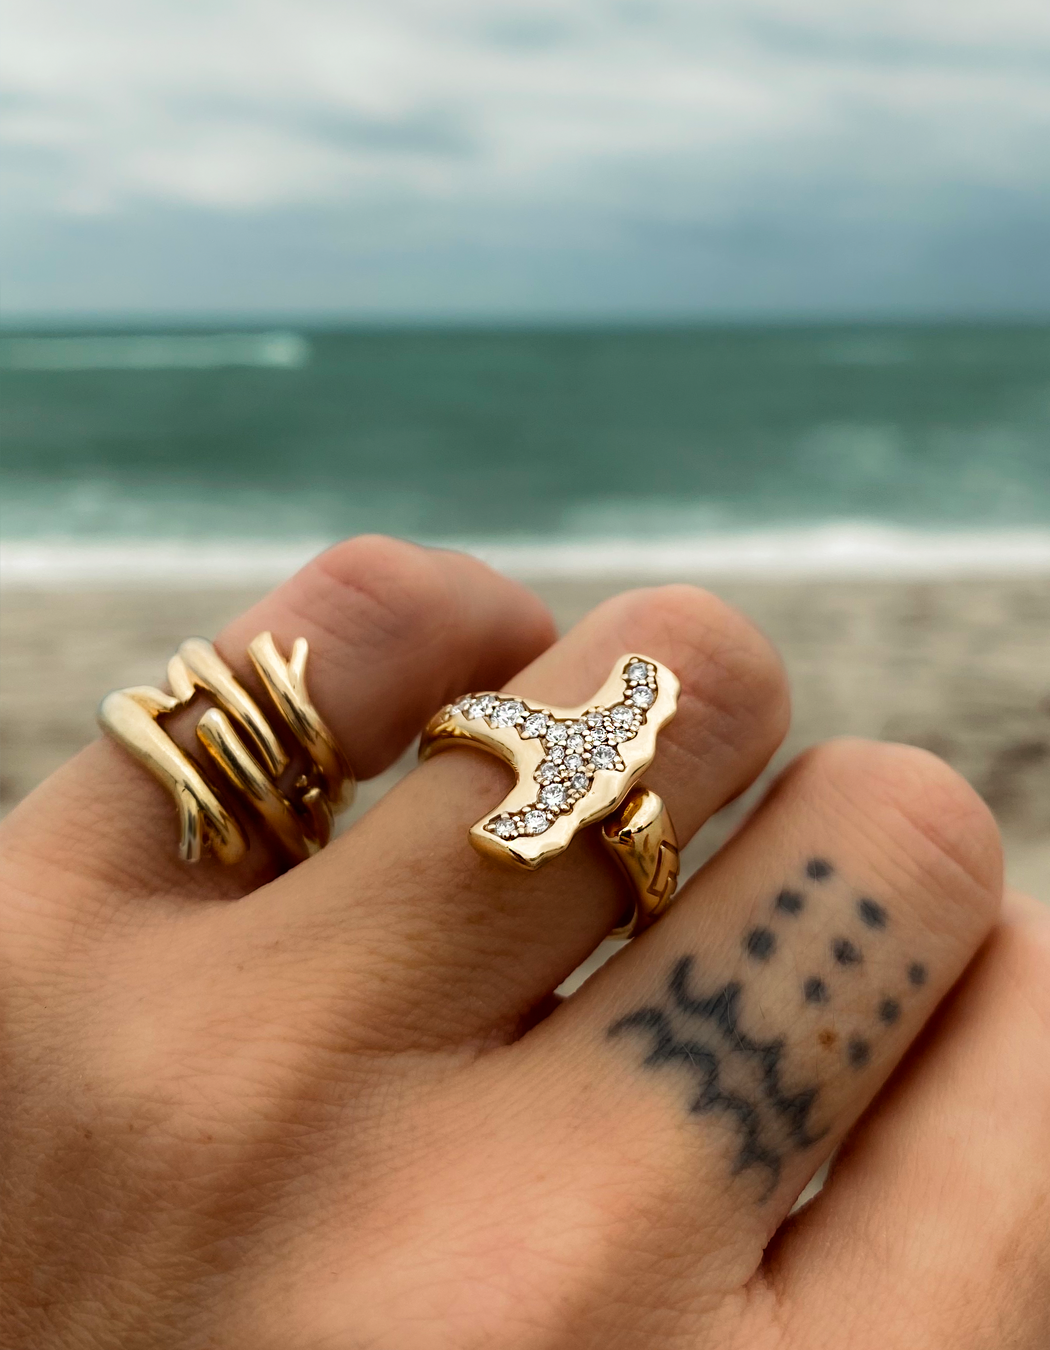 Hammerhead Shark Ring with Diamonds 14k / 18k Gold